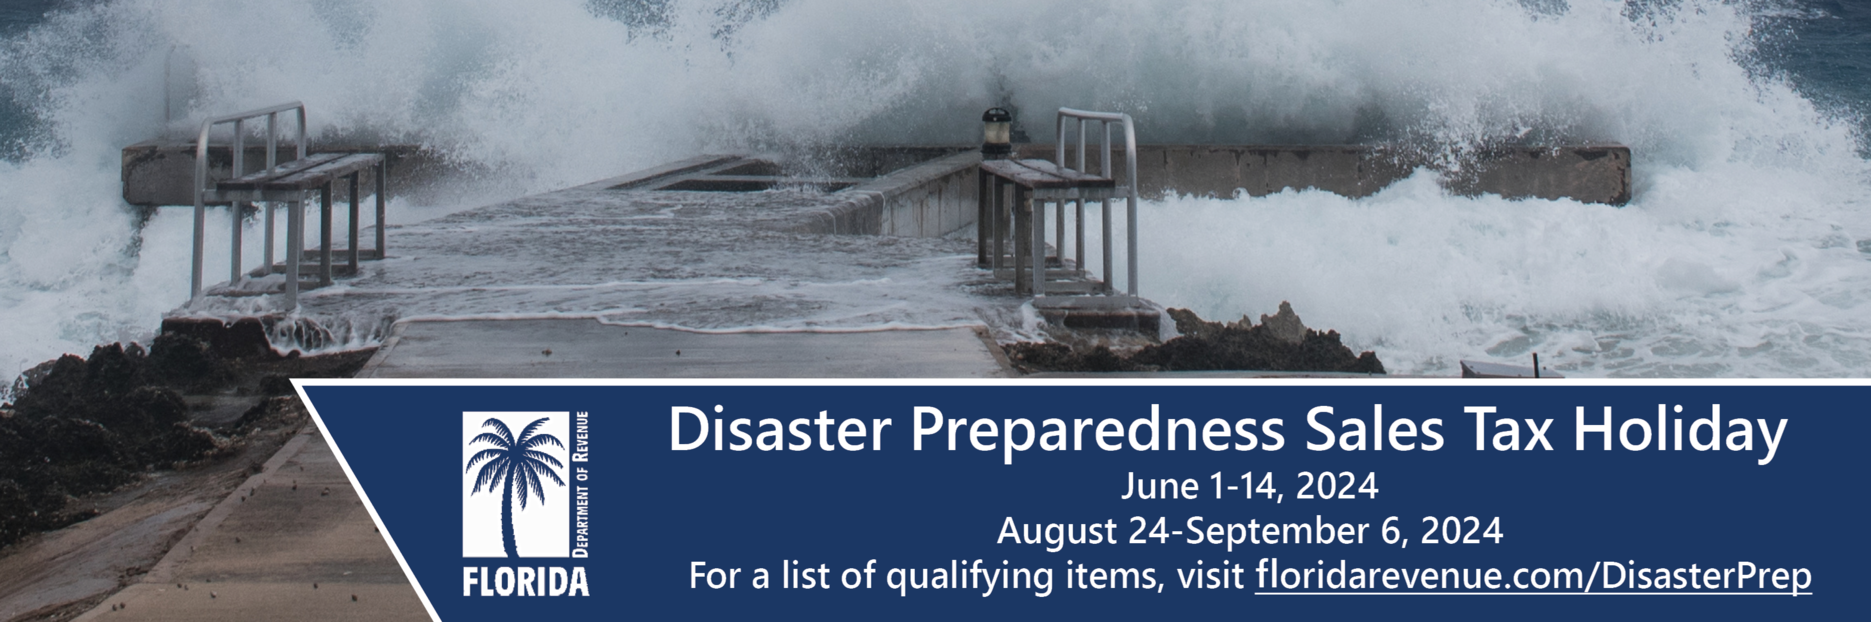 FLORIDA - 2024 Disaster Preparedness Sales Tax Holidays June 1, 2024 Through June 14, 2024 and August 24, 2024 Through September 6, 2024